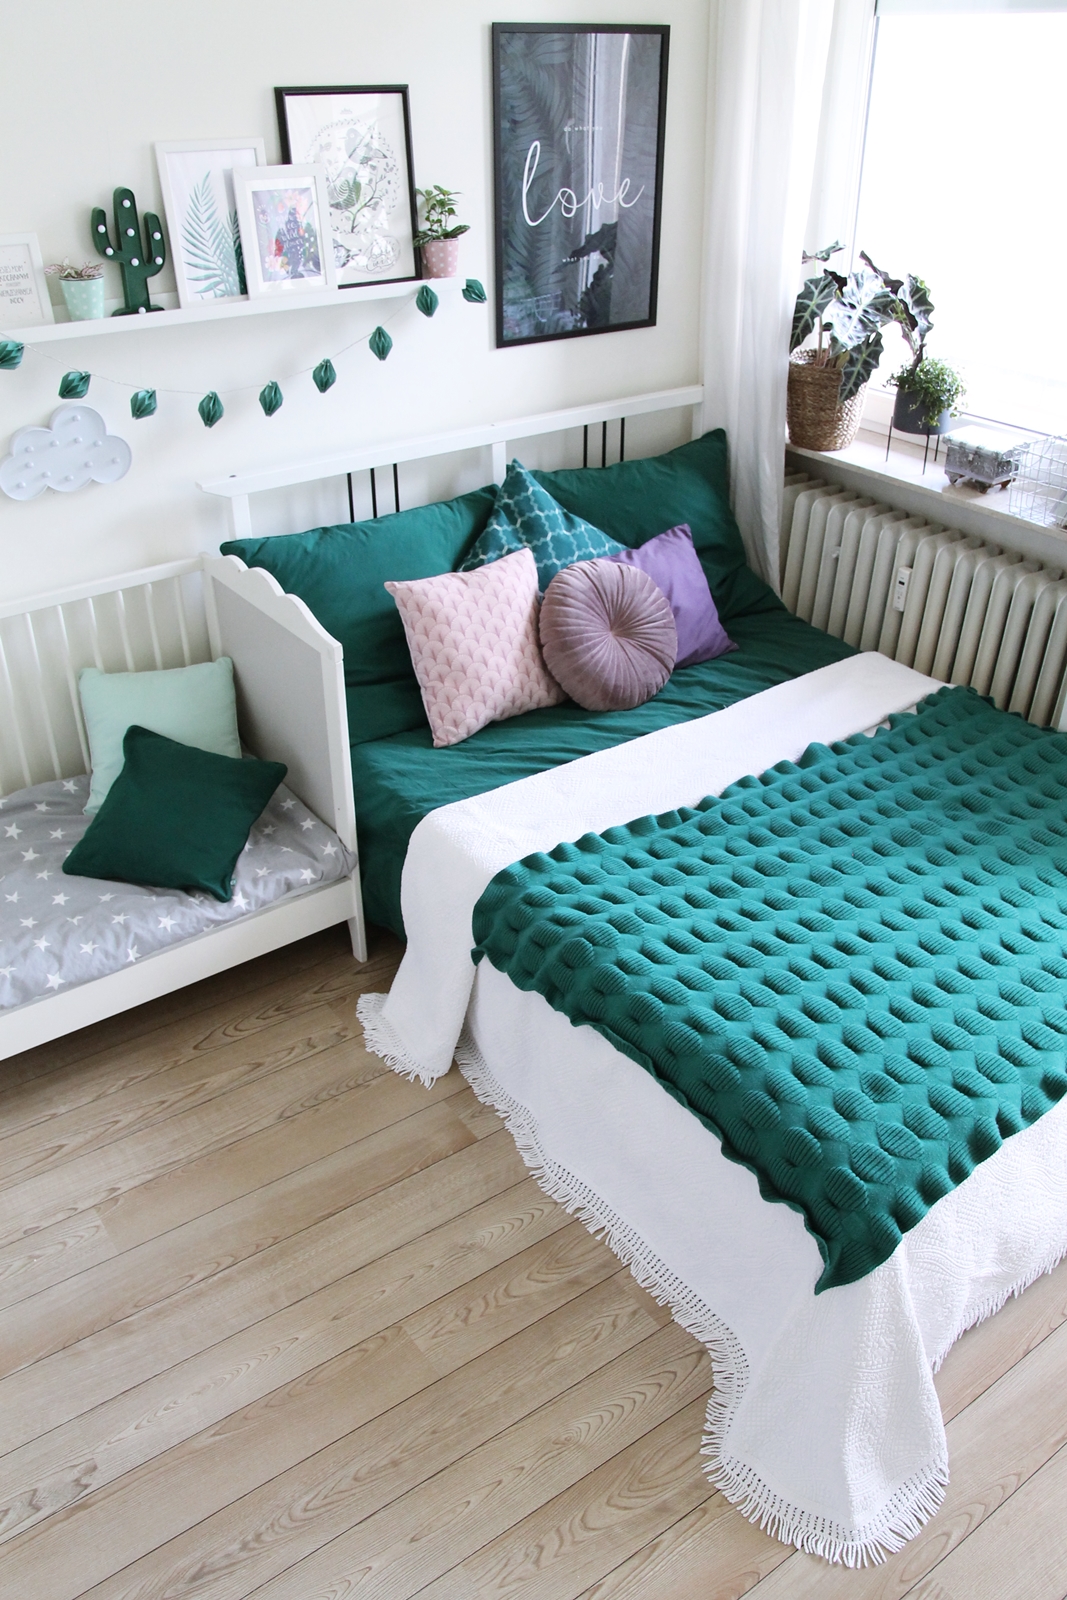 Colorful bohemian interior bedroom